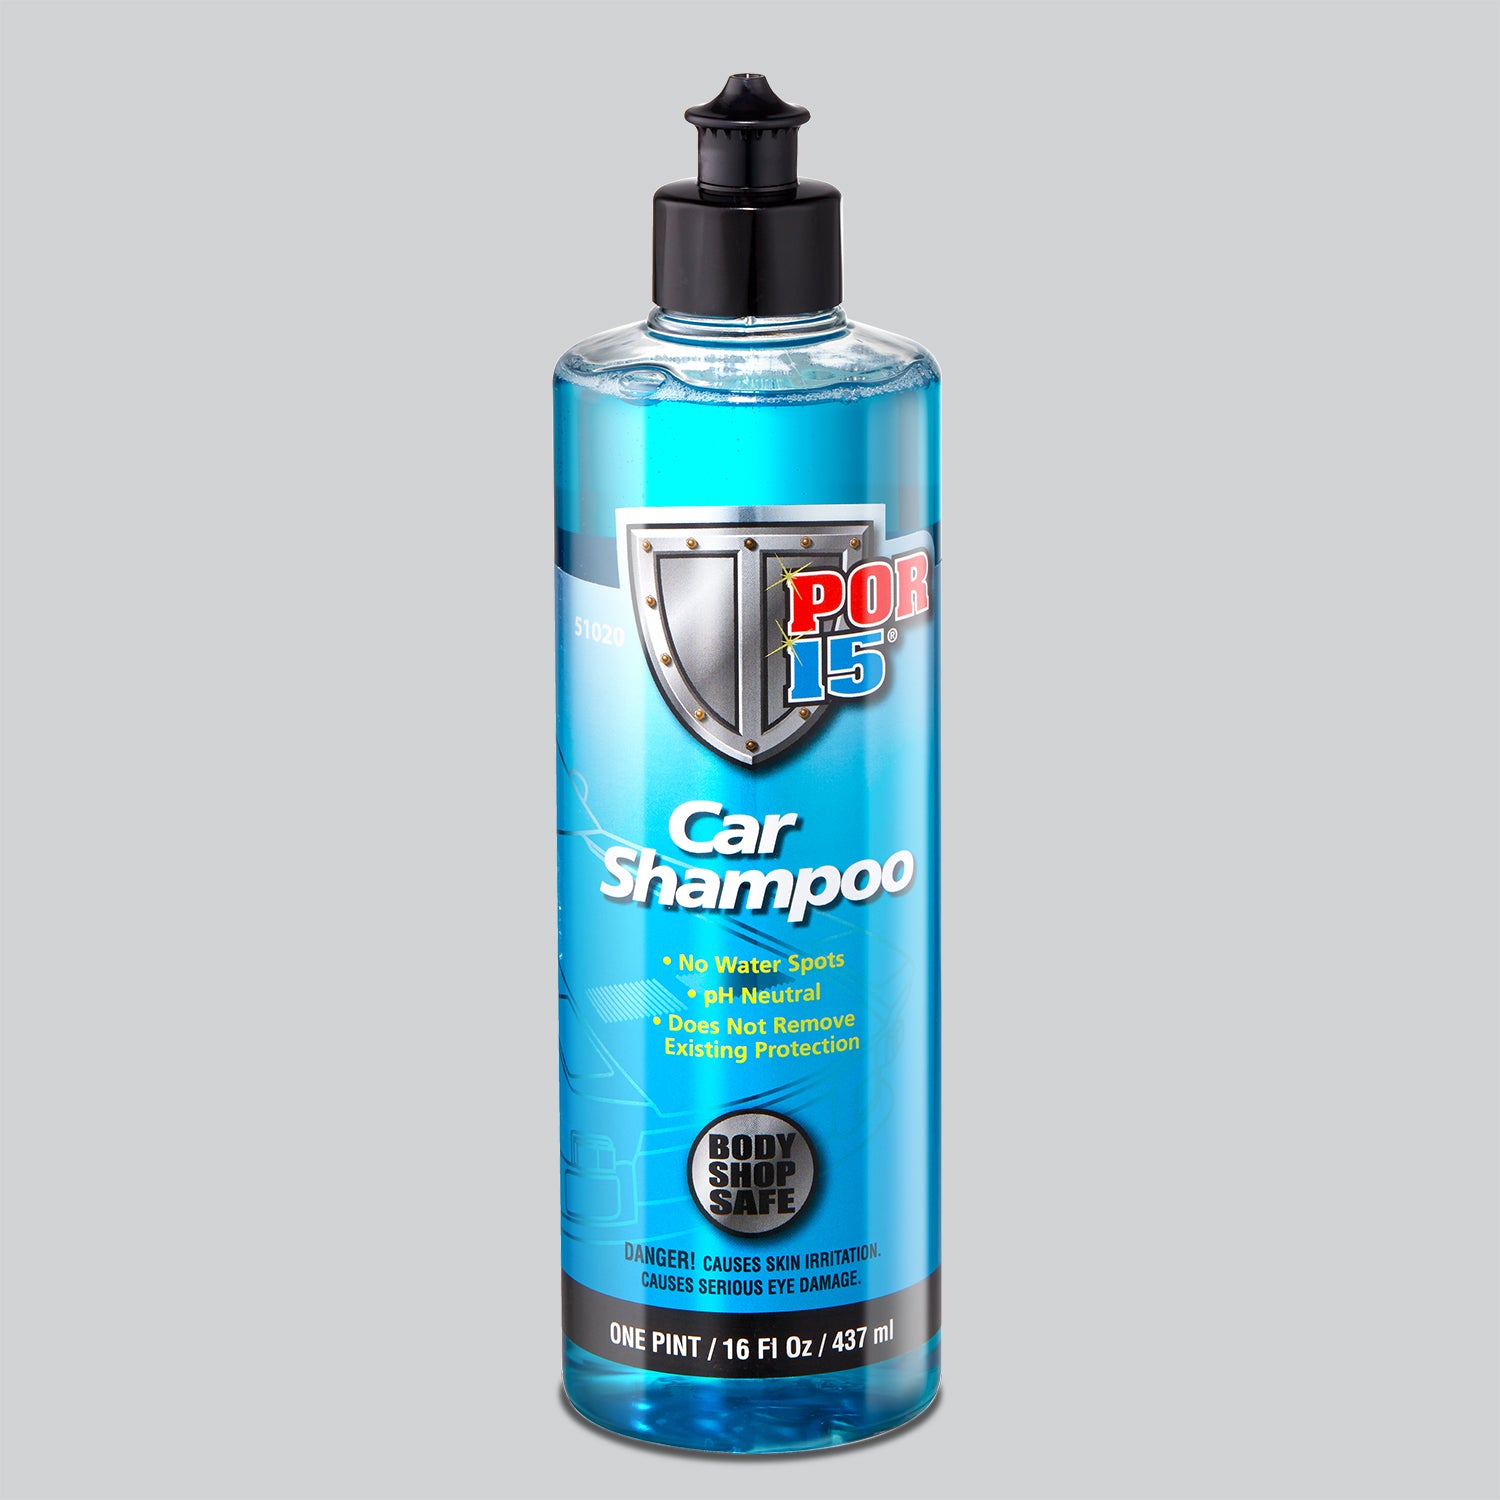 Car Body Shampoo, pH-Neutral Shampoo for Cars